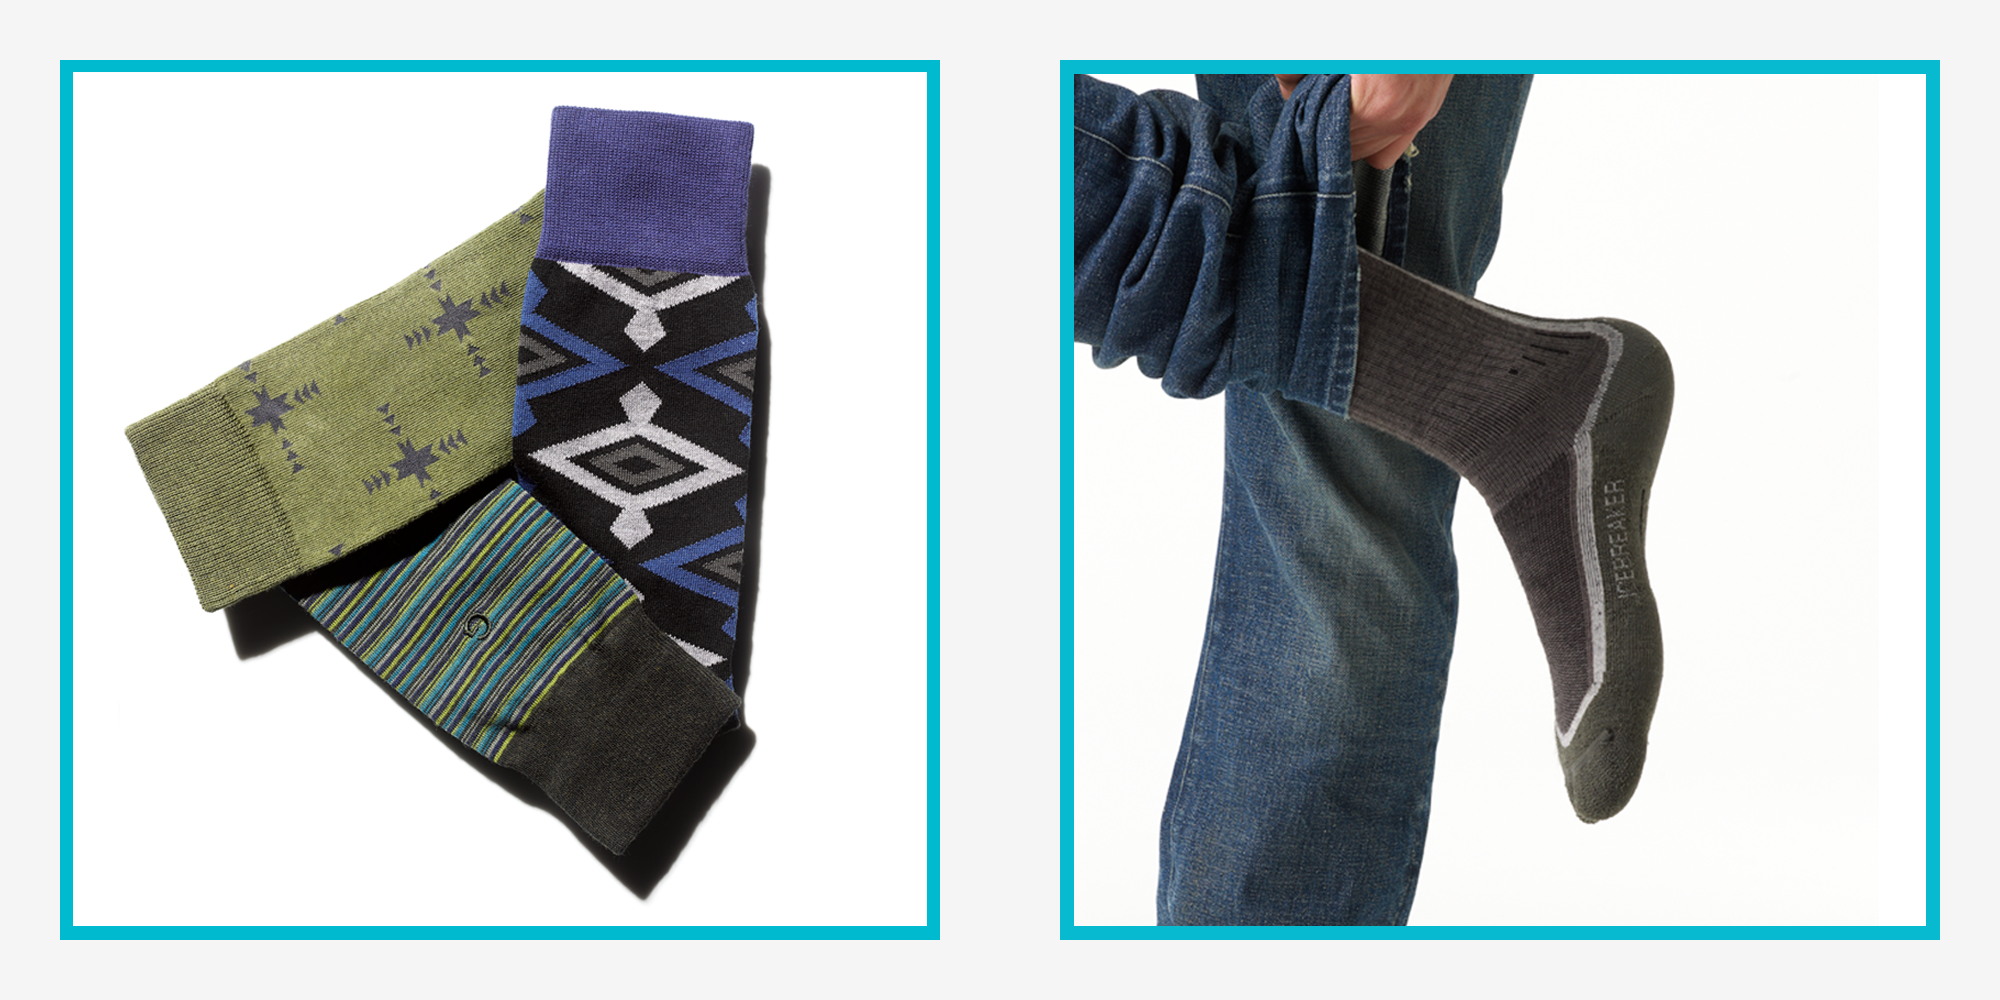 The great sock debate: do socks go over or under leg warmers?